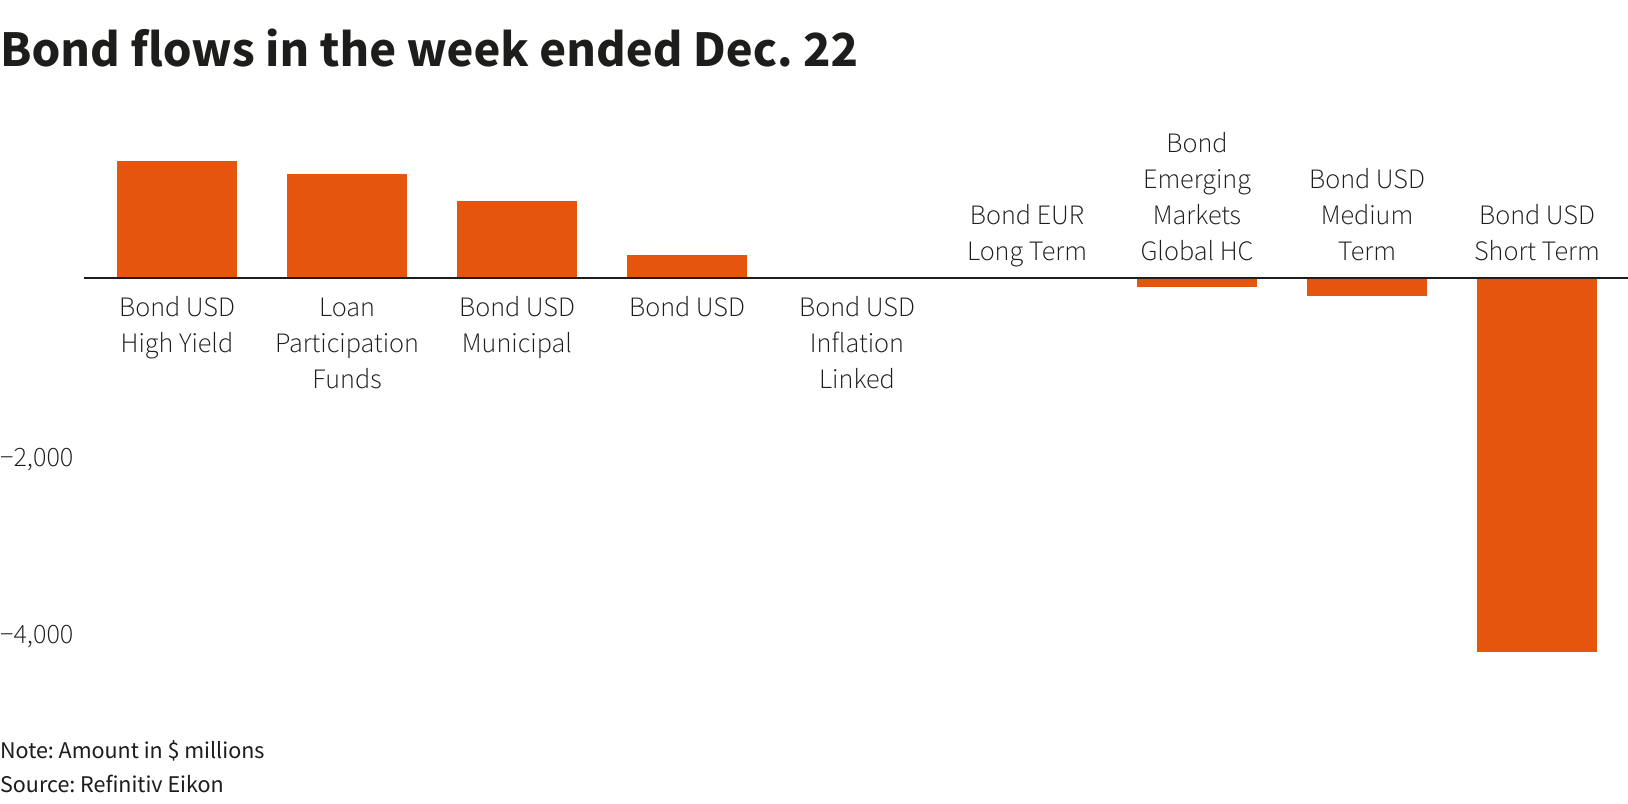 Bond flows in the week ended Dec. 22